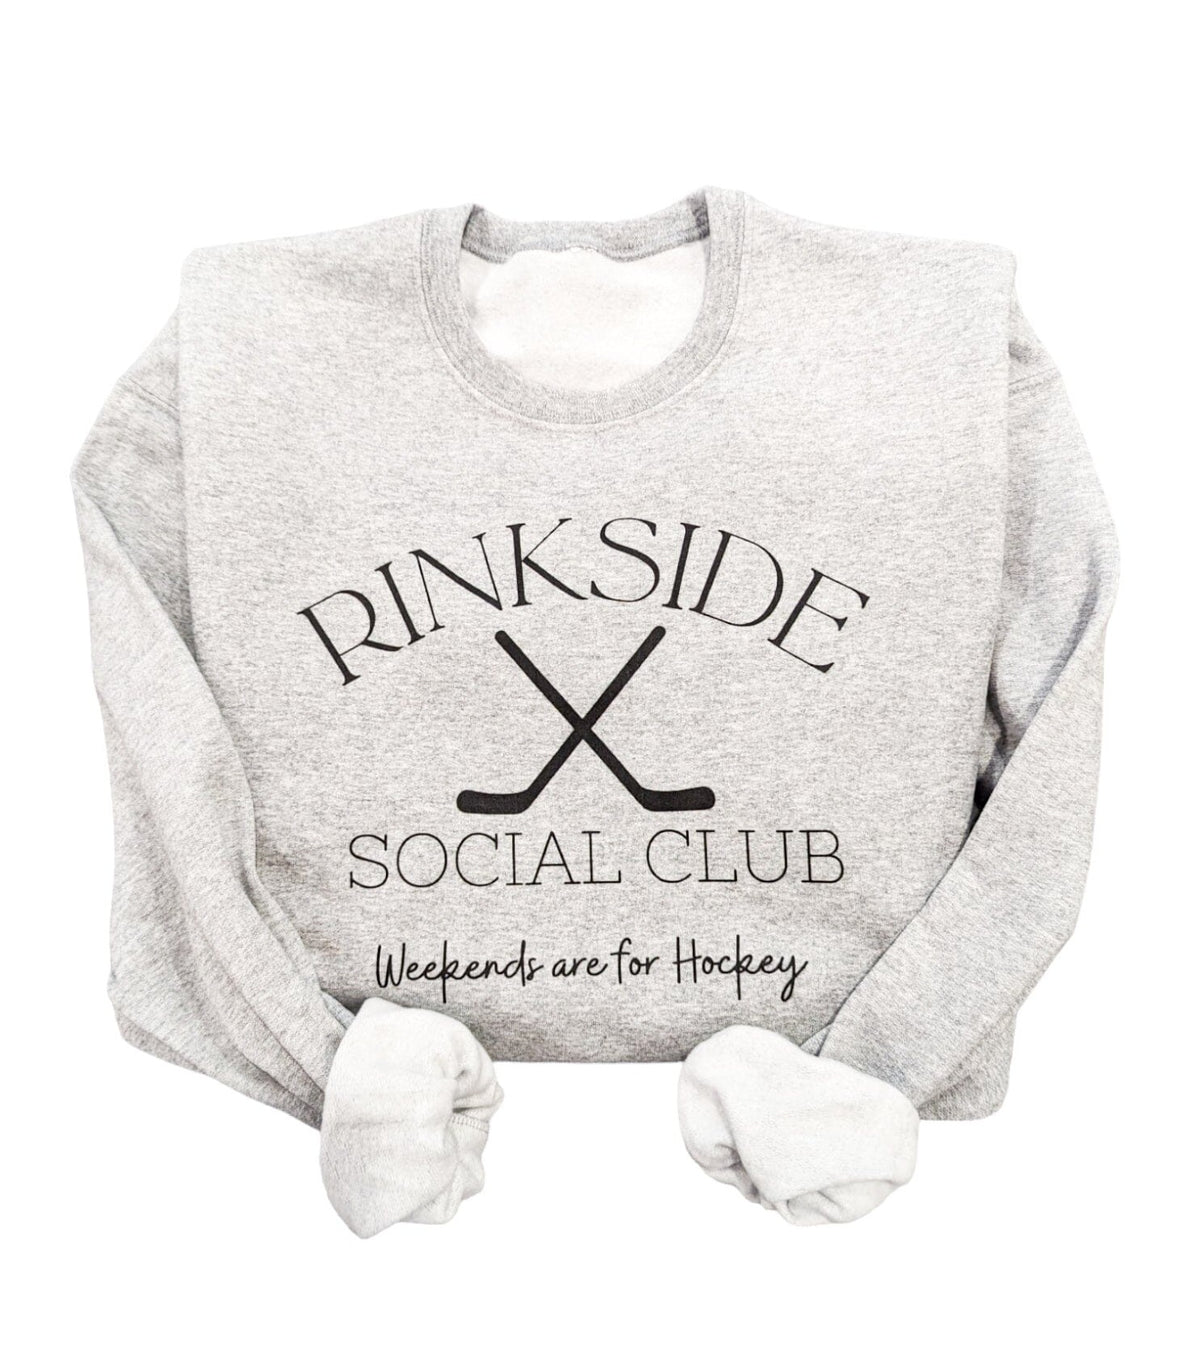 Rink side Social Club Pullover